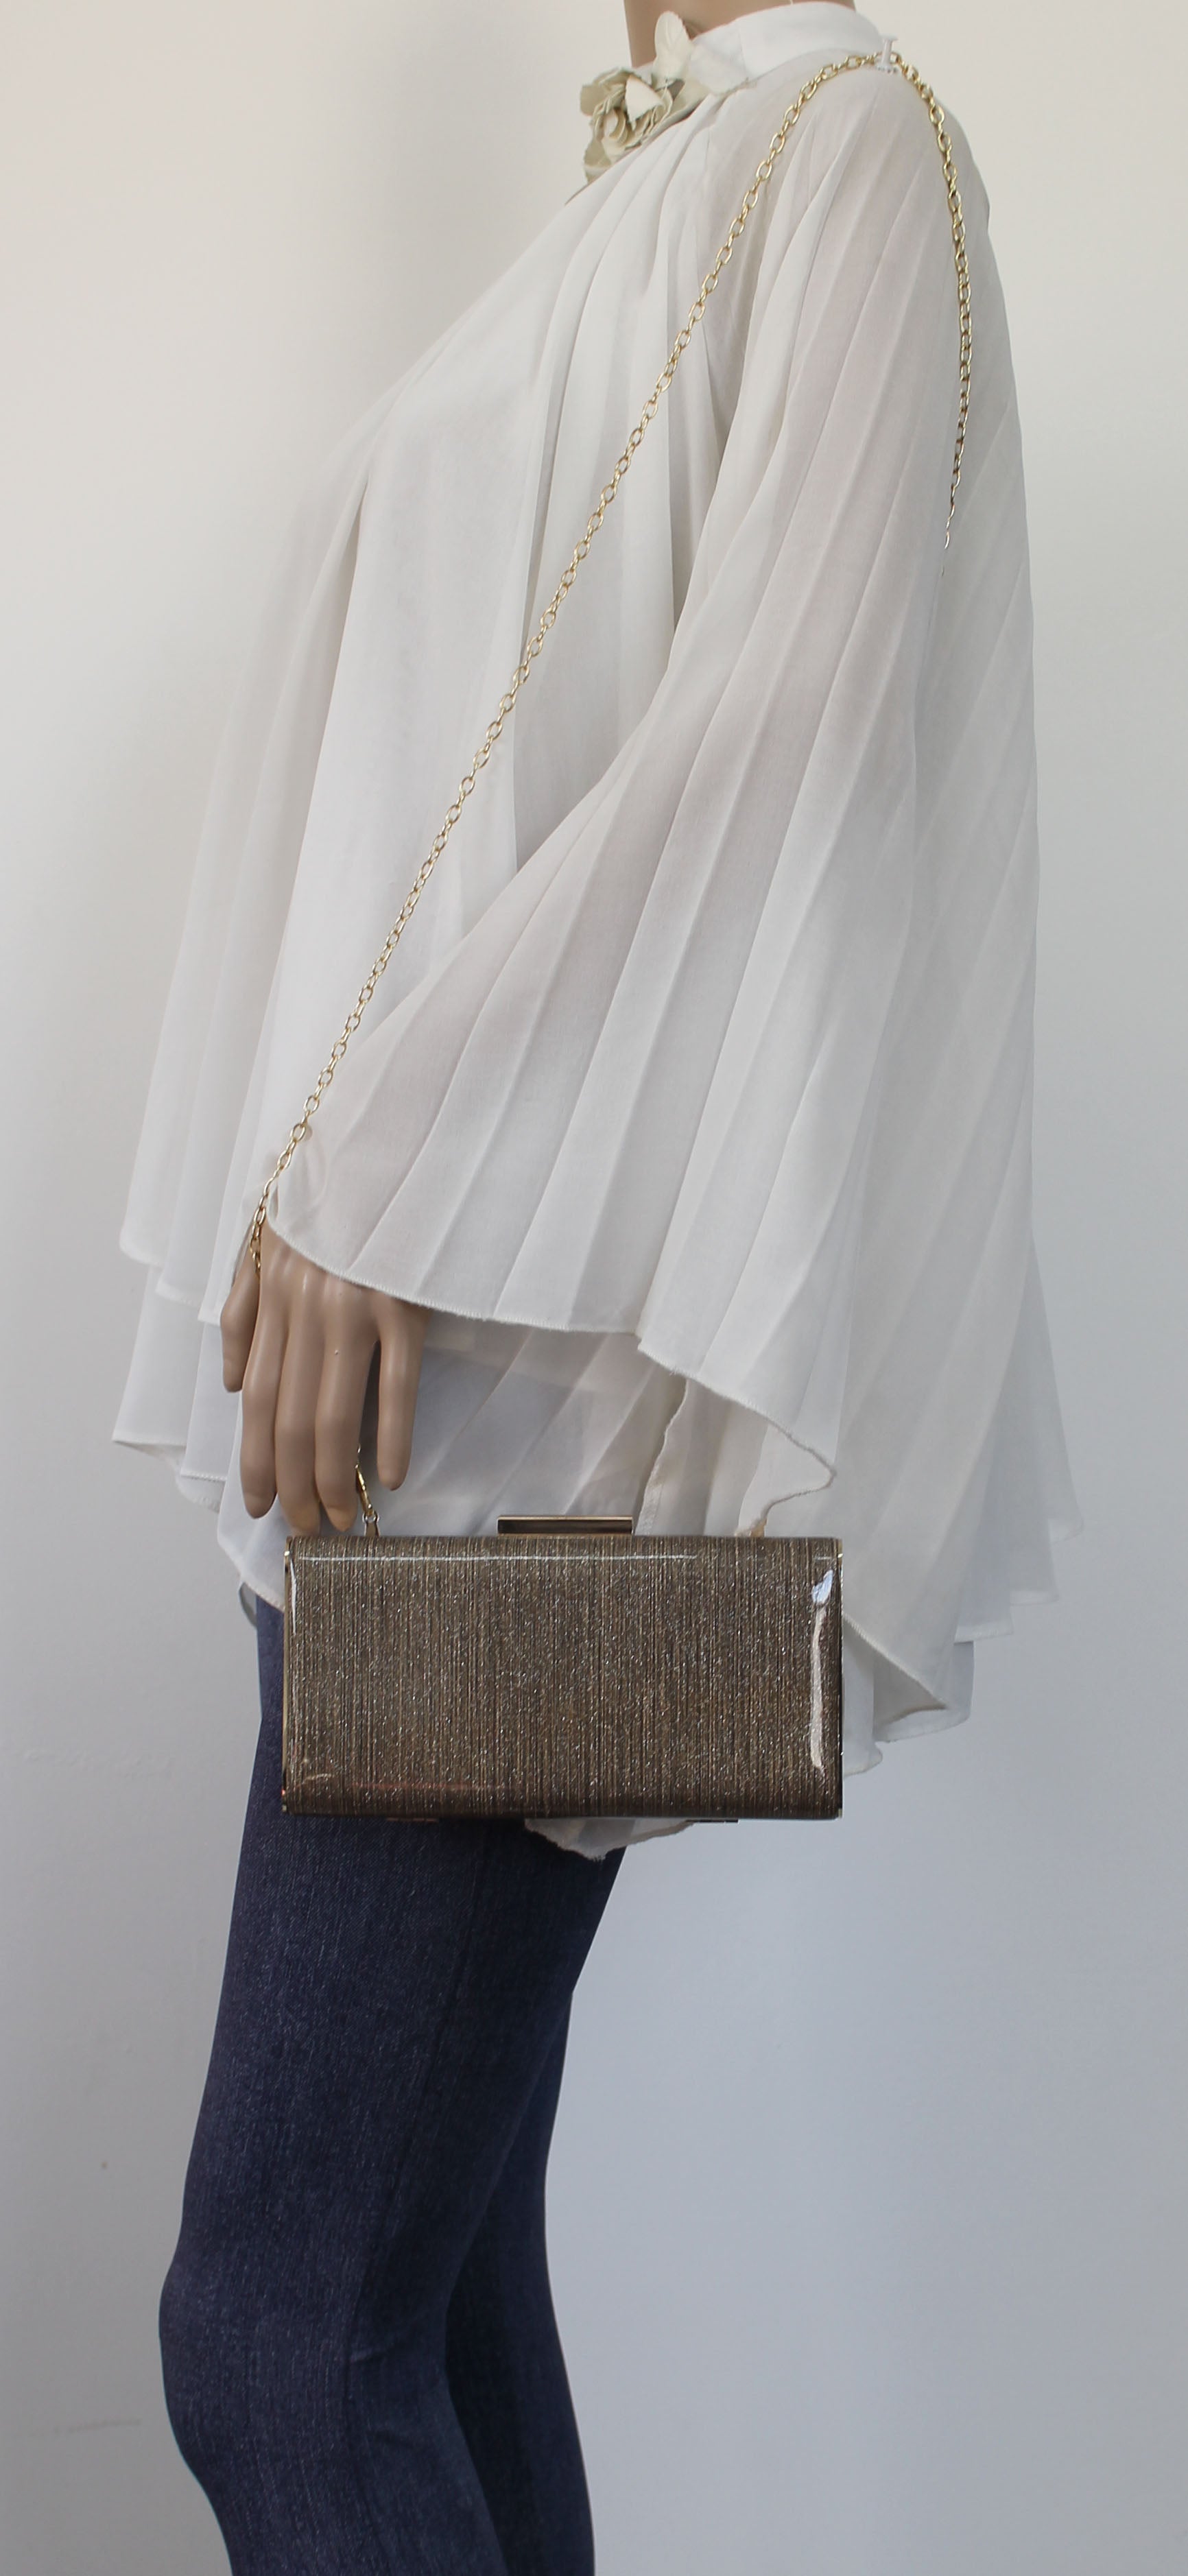 SWANKYSWANS Melissa Clutch Bag Gold Cute Cheap Clutch Bag For Weddings School and Work